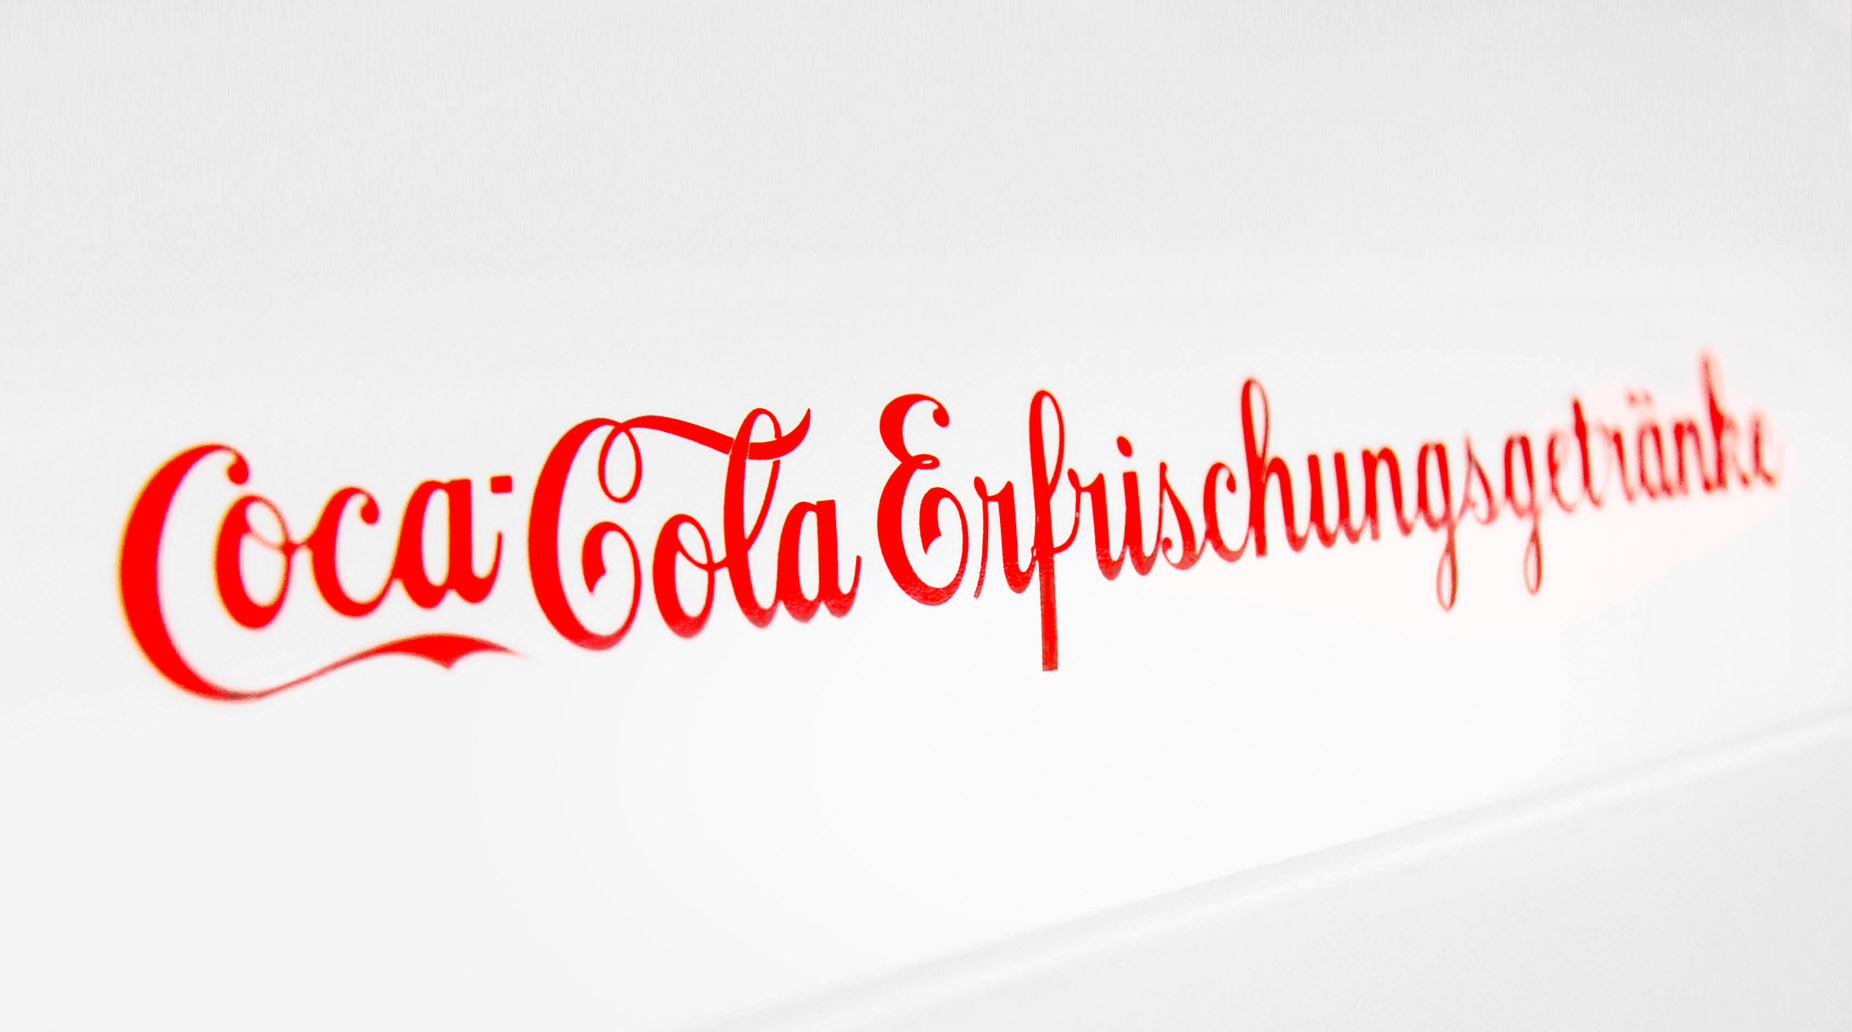 Coca Cola Erfrischungsgetränke Ag
 CCE AG — Corporate Design Relaunch